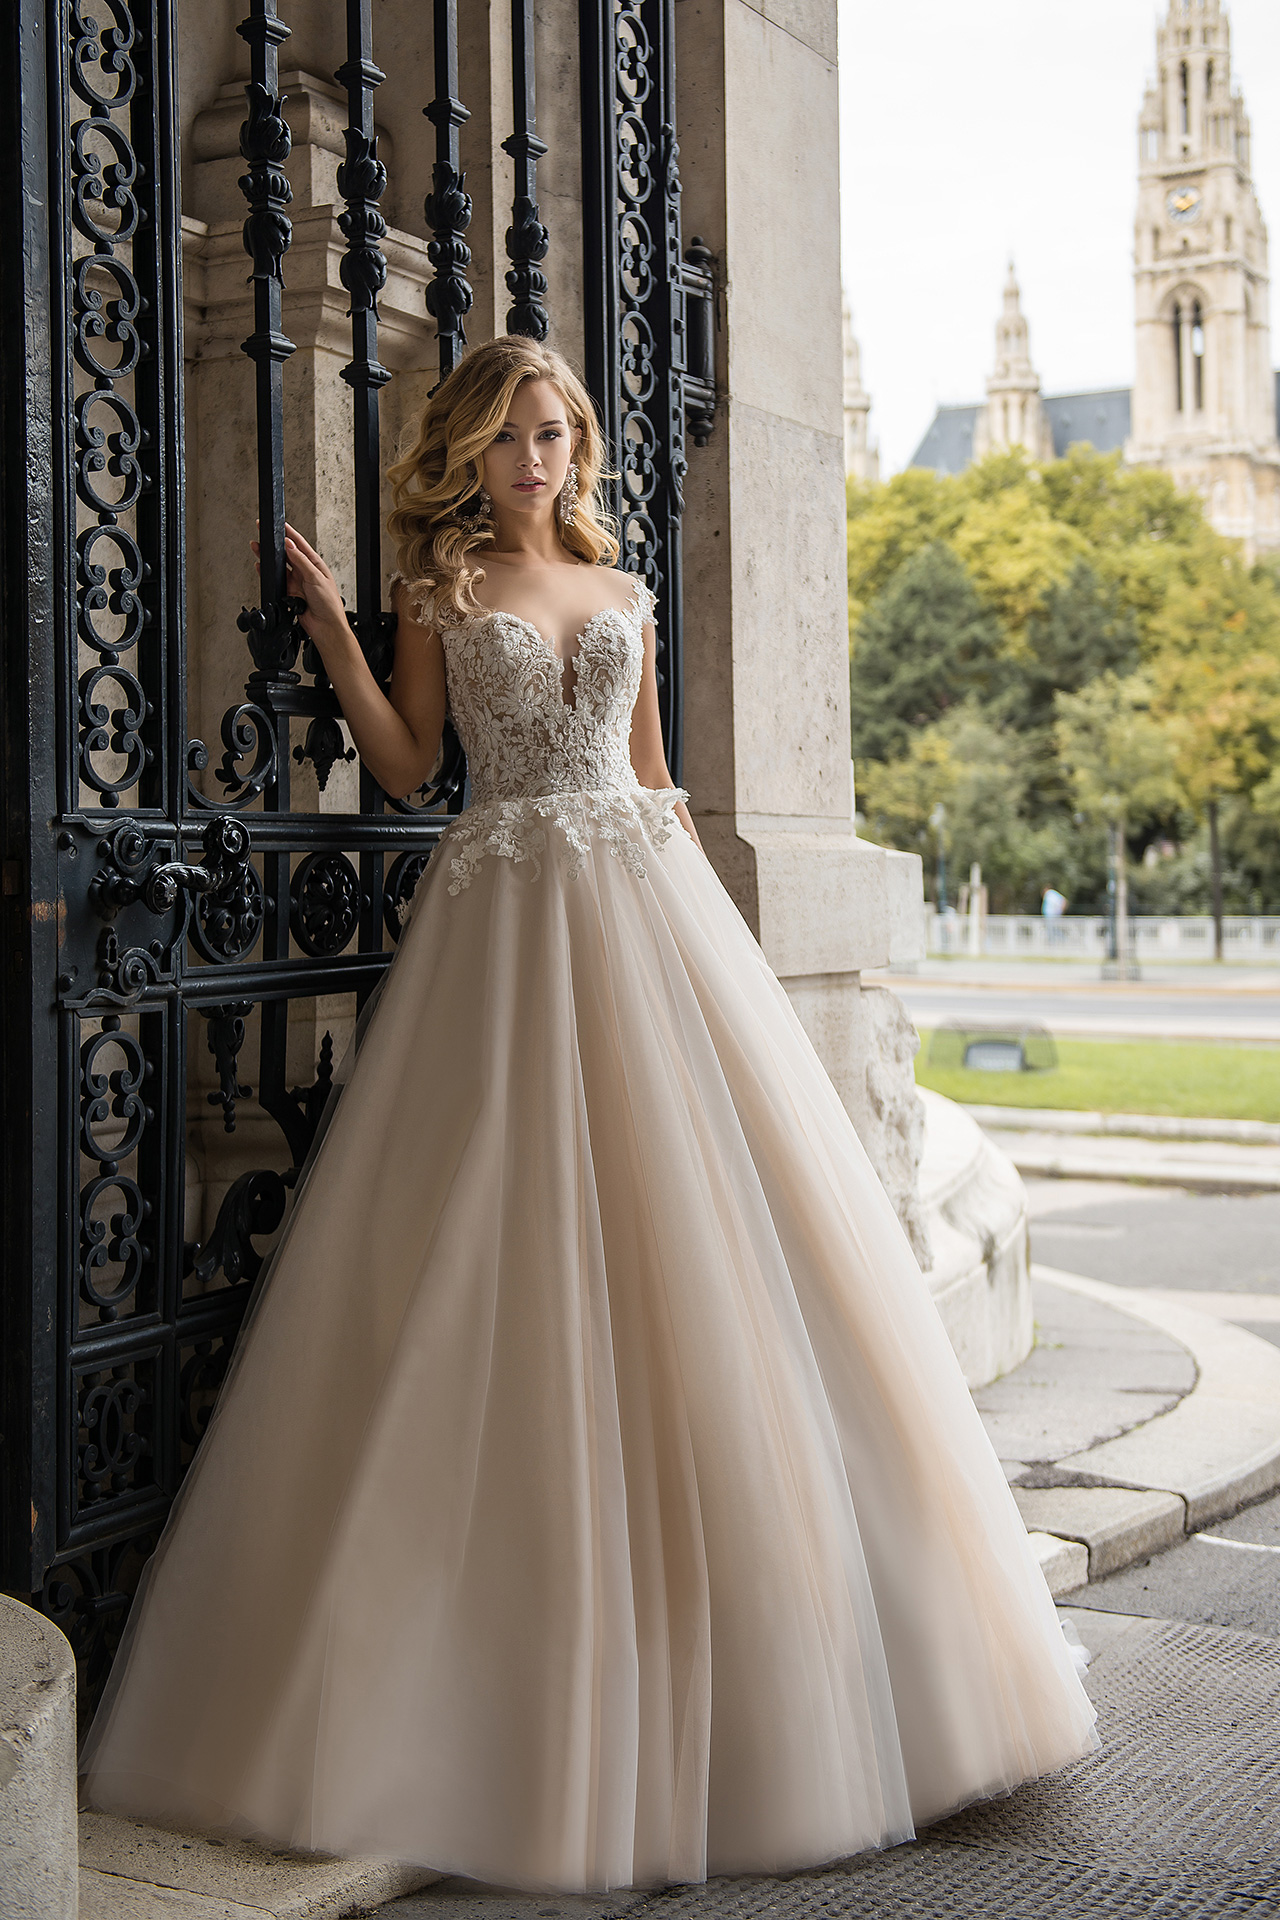 Sexy wedding dress, Boho style wedding dress, Blush tulle bridal gown, Sparkly evening dress, Beautiful engagement dress, Adelita